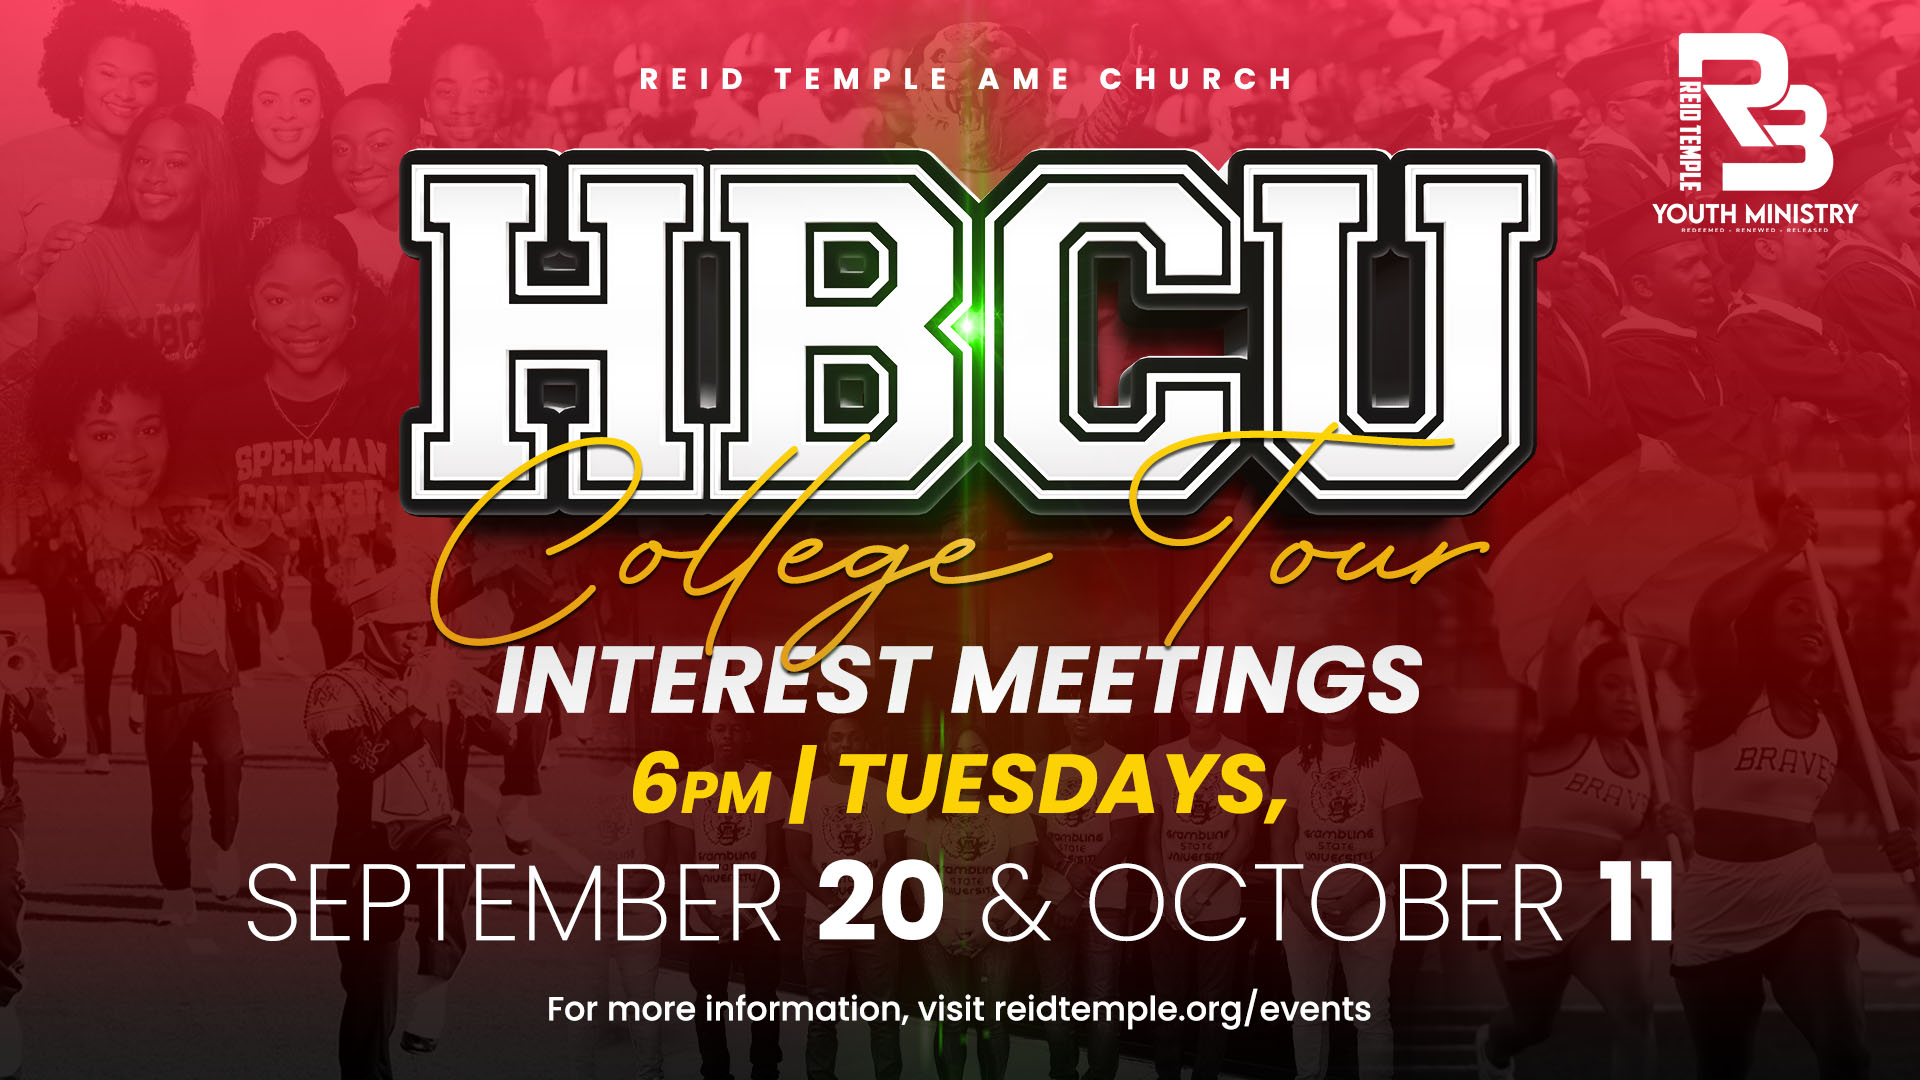 HBCU College Tour Interest Meeting